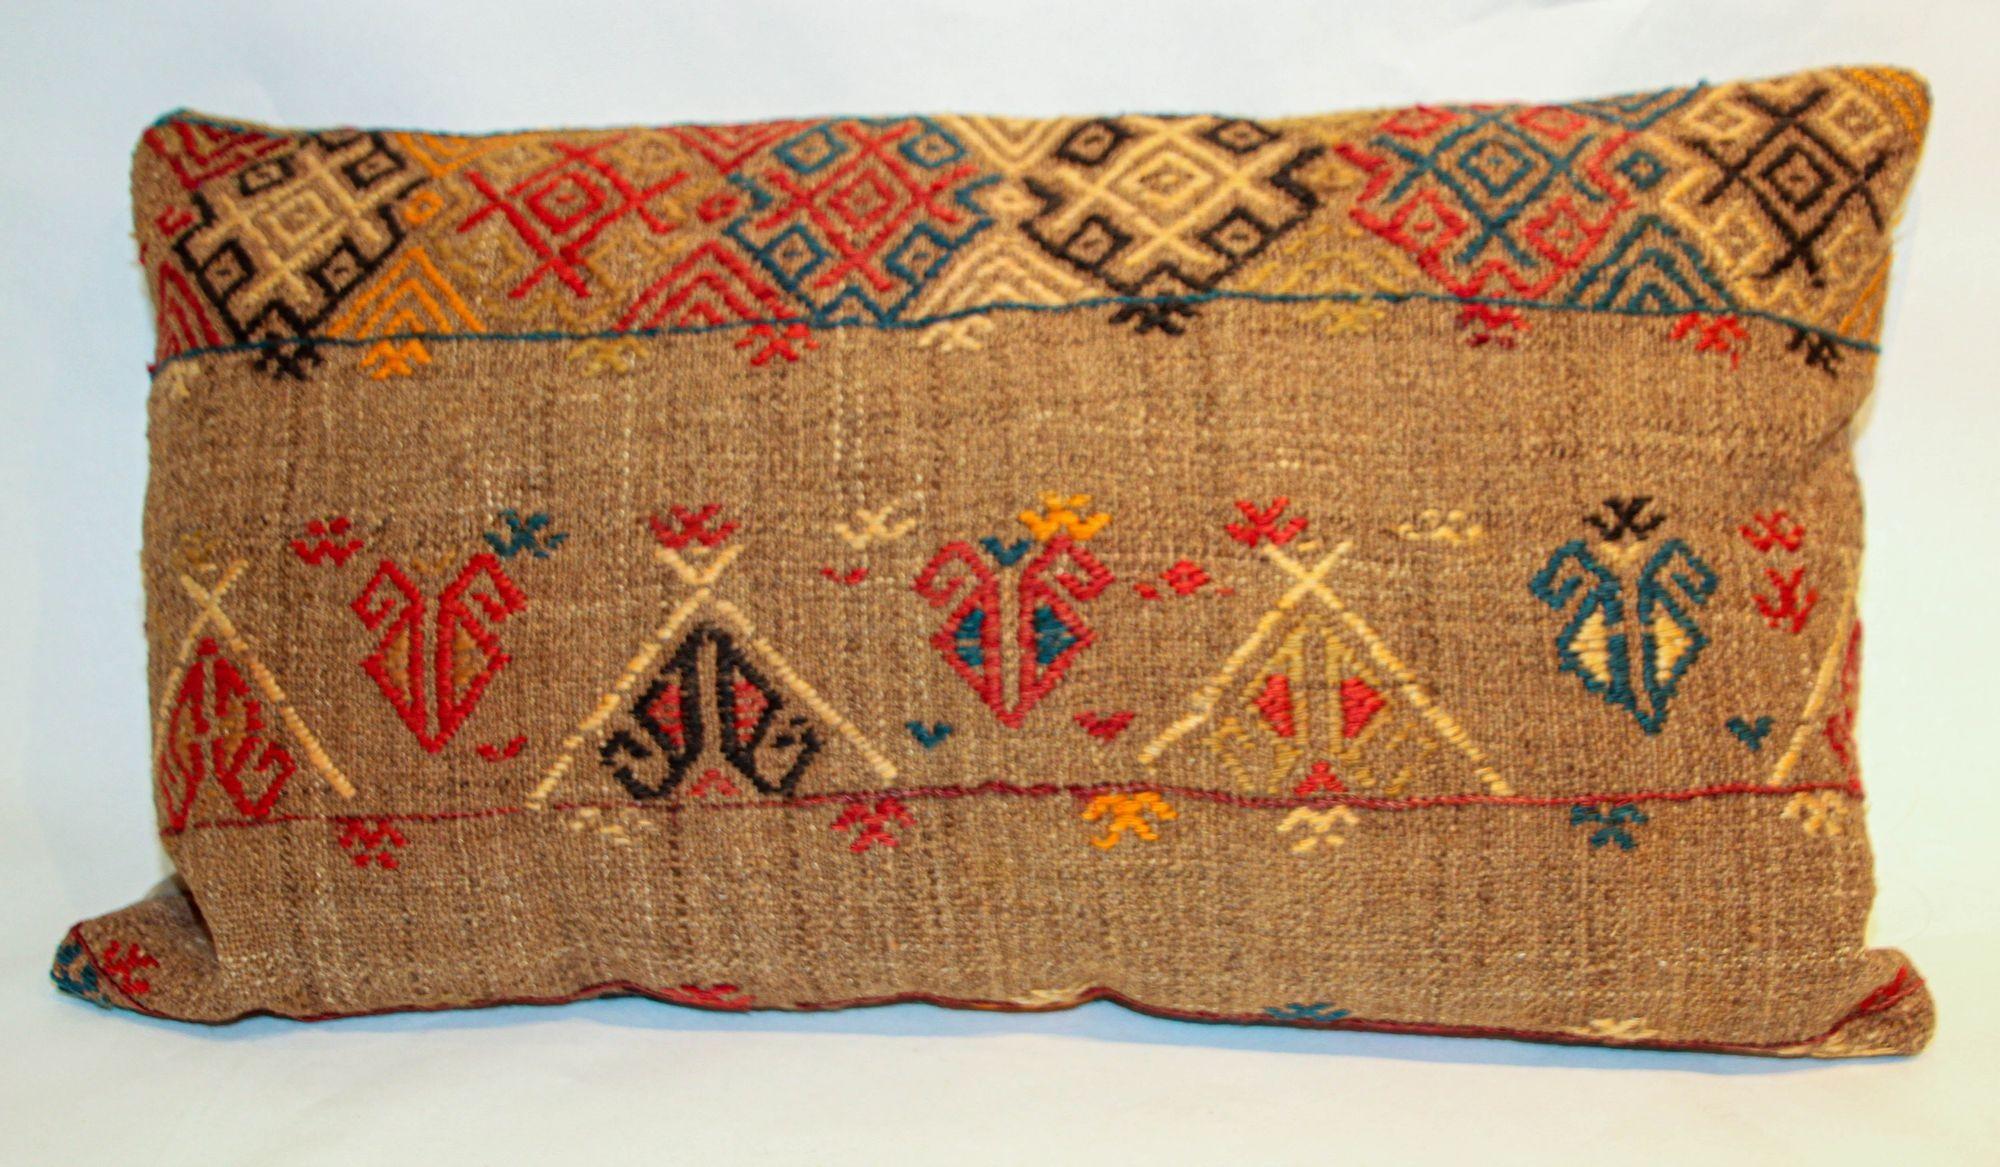 Moroccan large decorative lumbar pillow, handmade kilim flat weave pillow, bohemian style throw pillow, organic wool pillow.
One-of-a-kind vintage kilim pillow Moroccan Berber handwoven tribal lumbar pillow made from a vintage rug.
Geometric